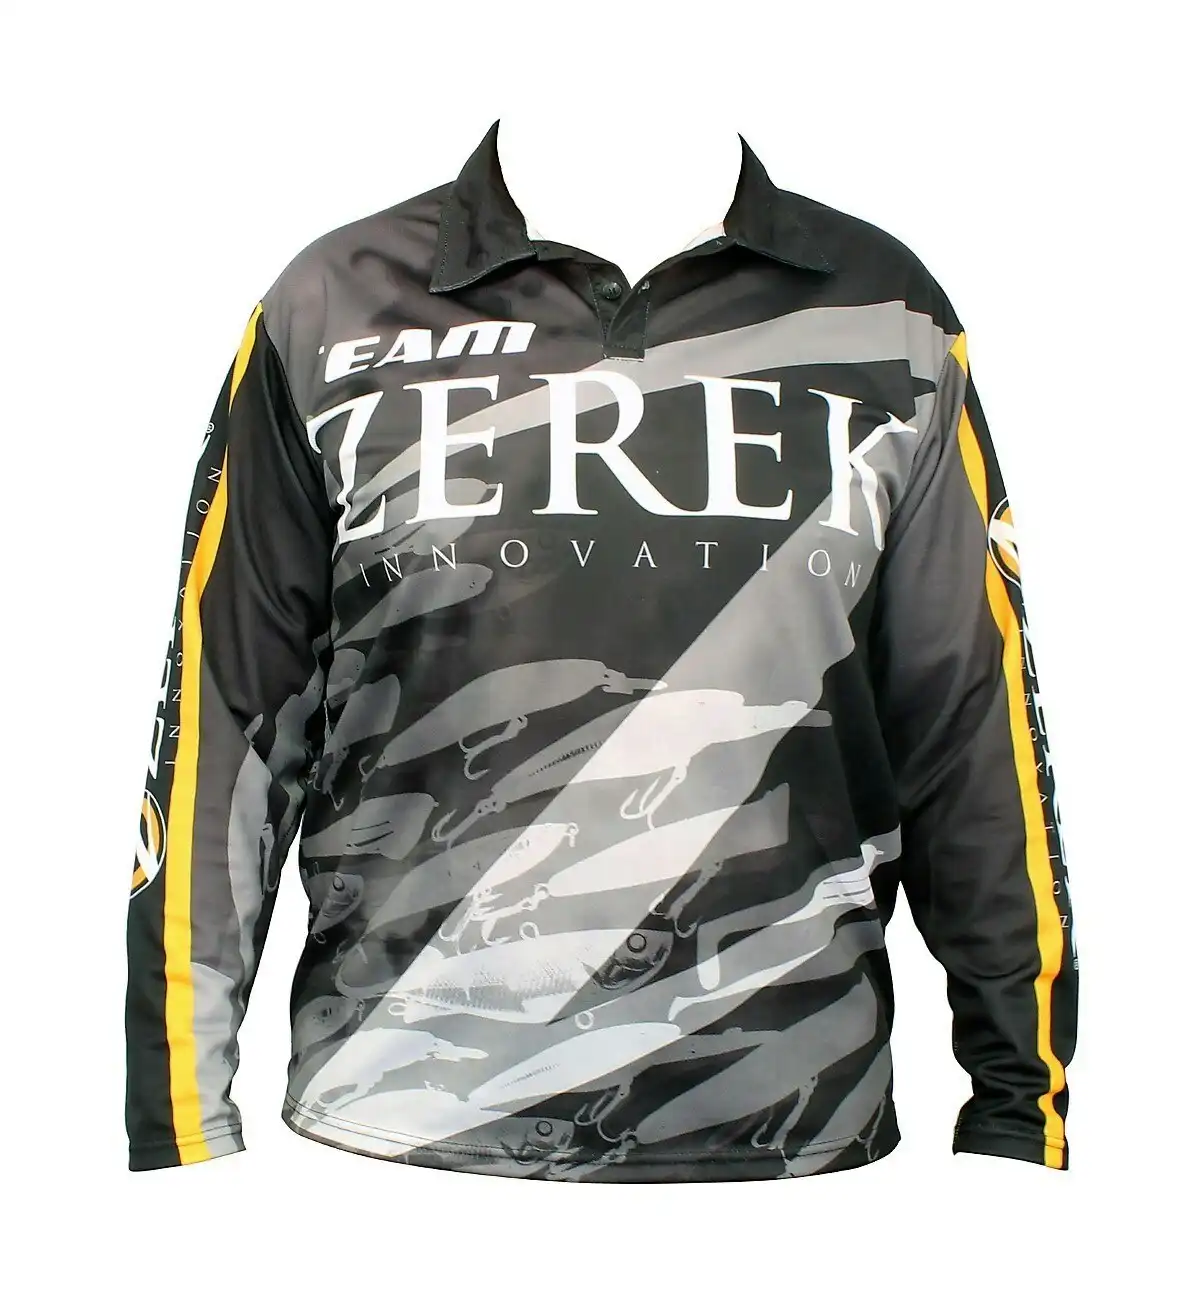 Team Zerek Fishing Shirt - Long Sleeved - UPF25+ Comfy,Light with Collar